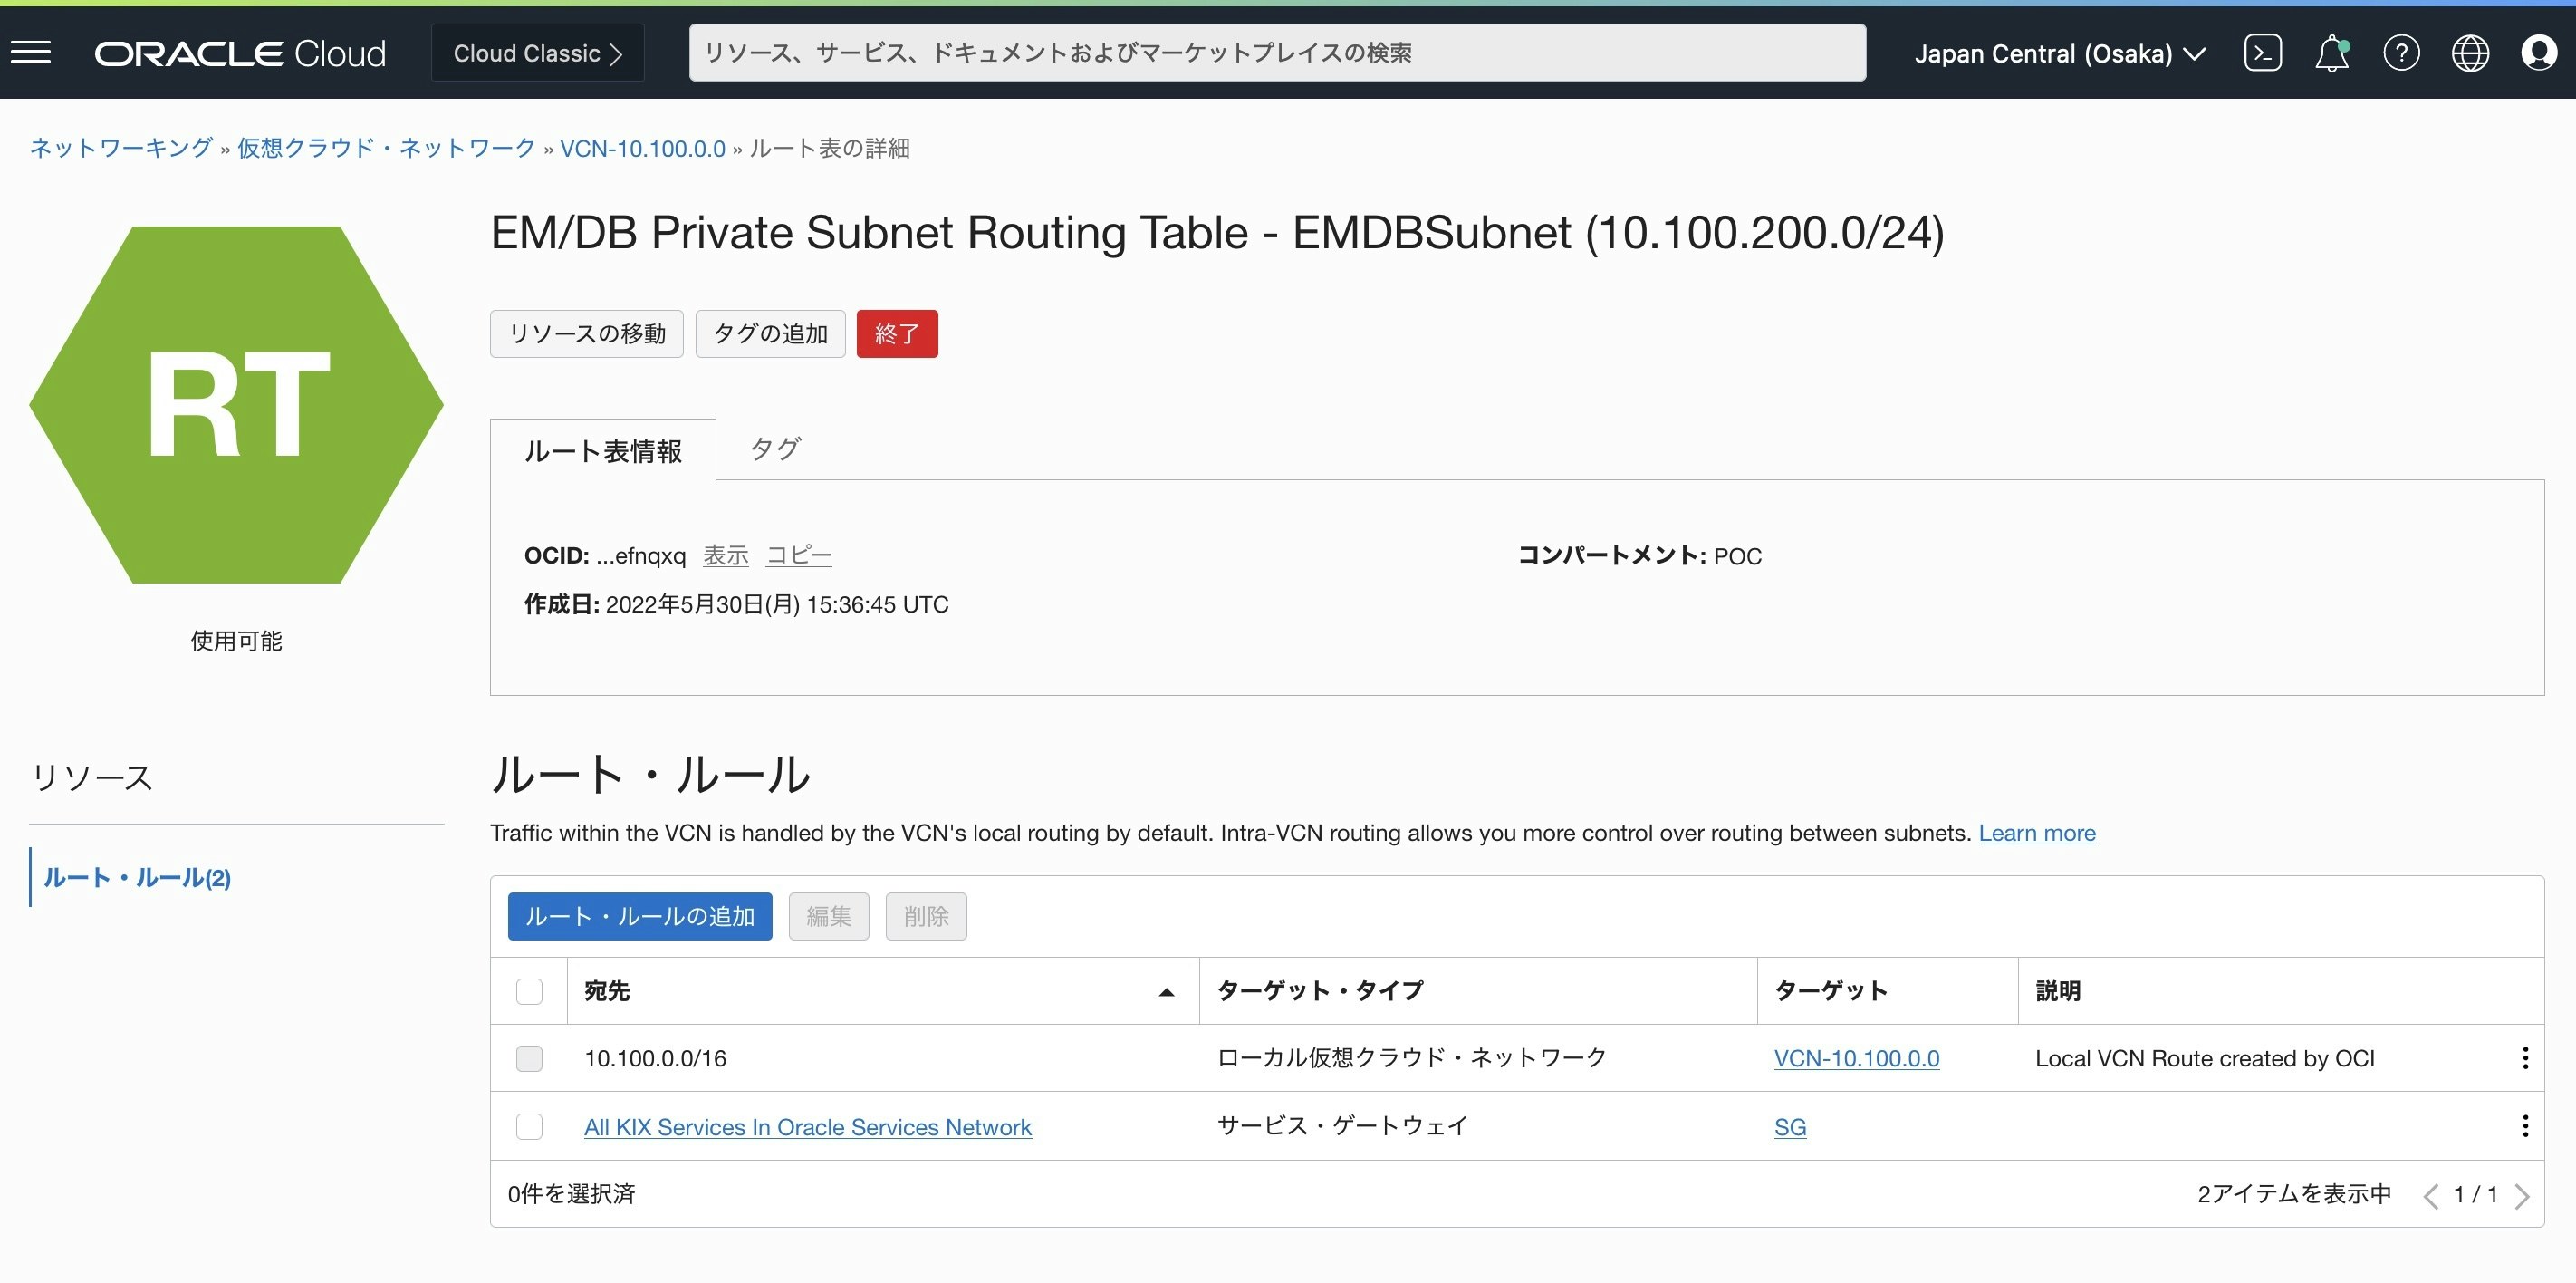 04_RT-EM:DB Private Subnet Routing Table - EMDBSubnet (10.100.200.0:24).jpg